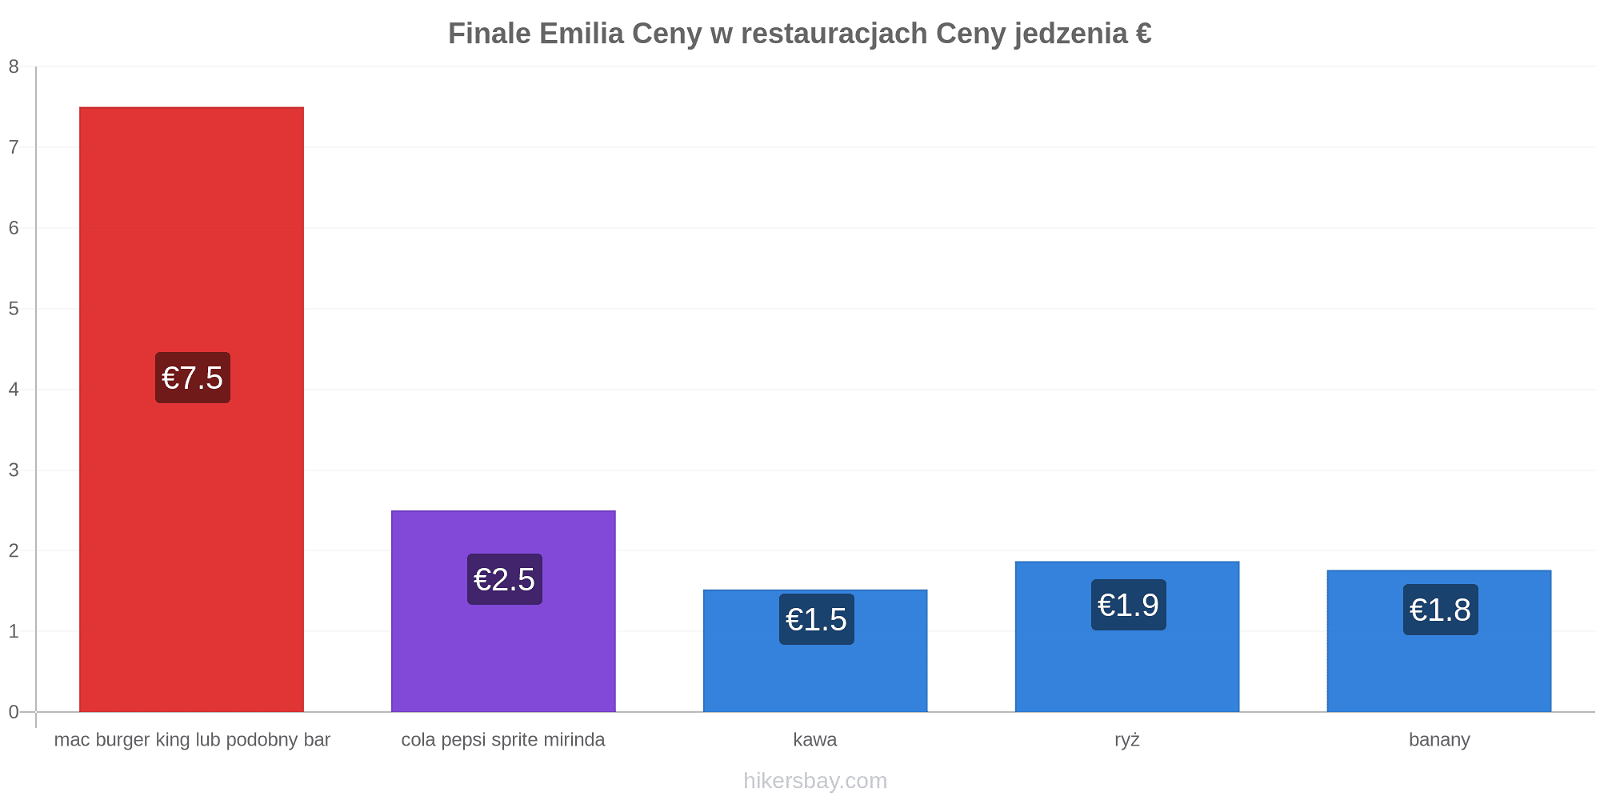 Finale Emilia zmiany cen hikersbay.com